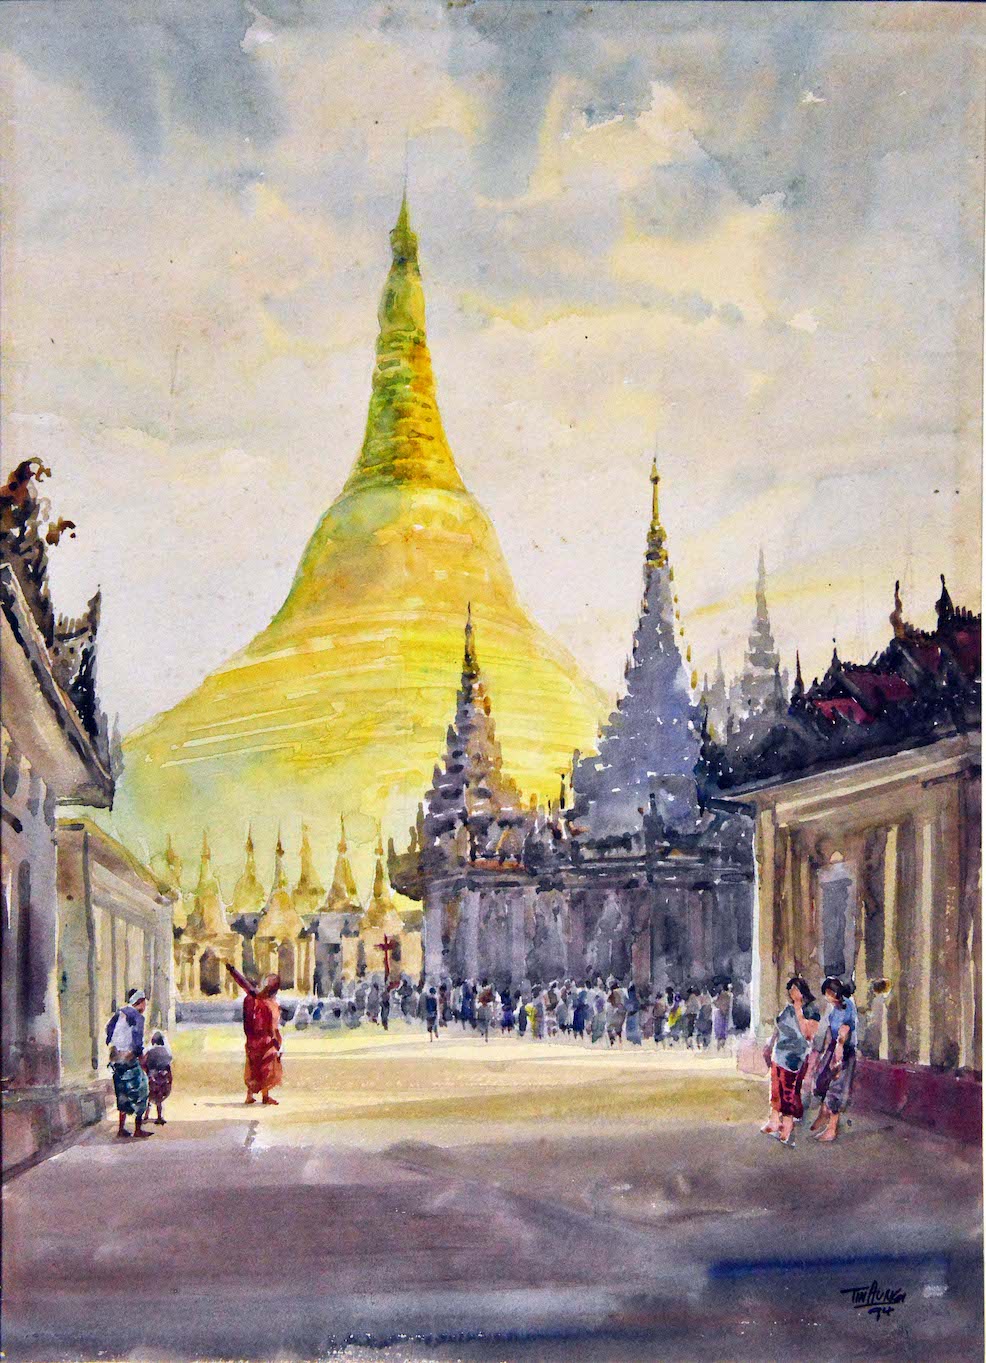 Shwedagon - I